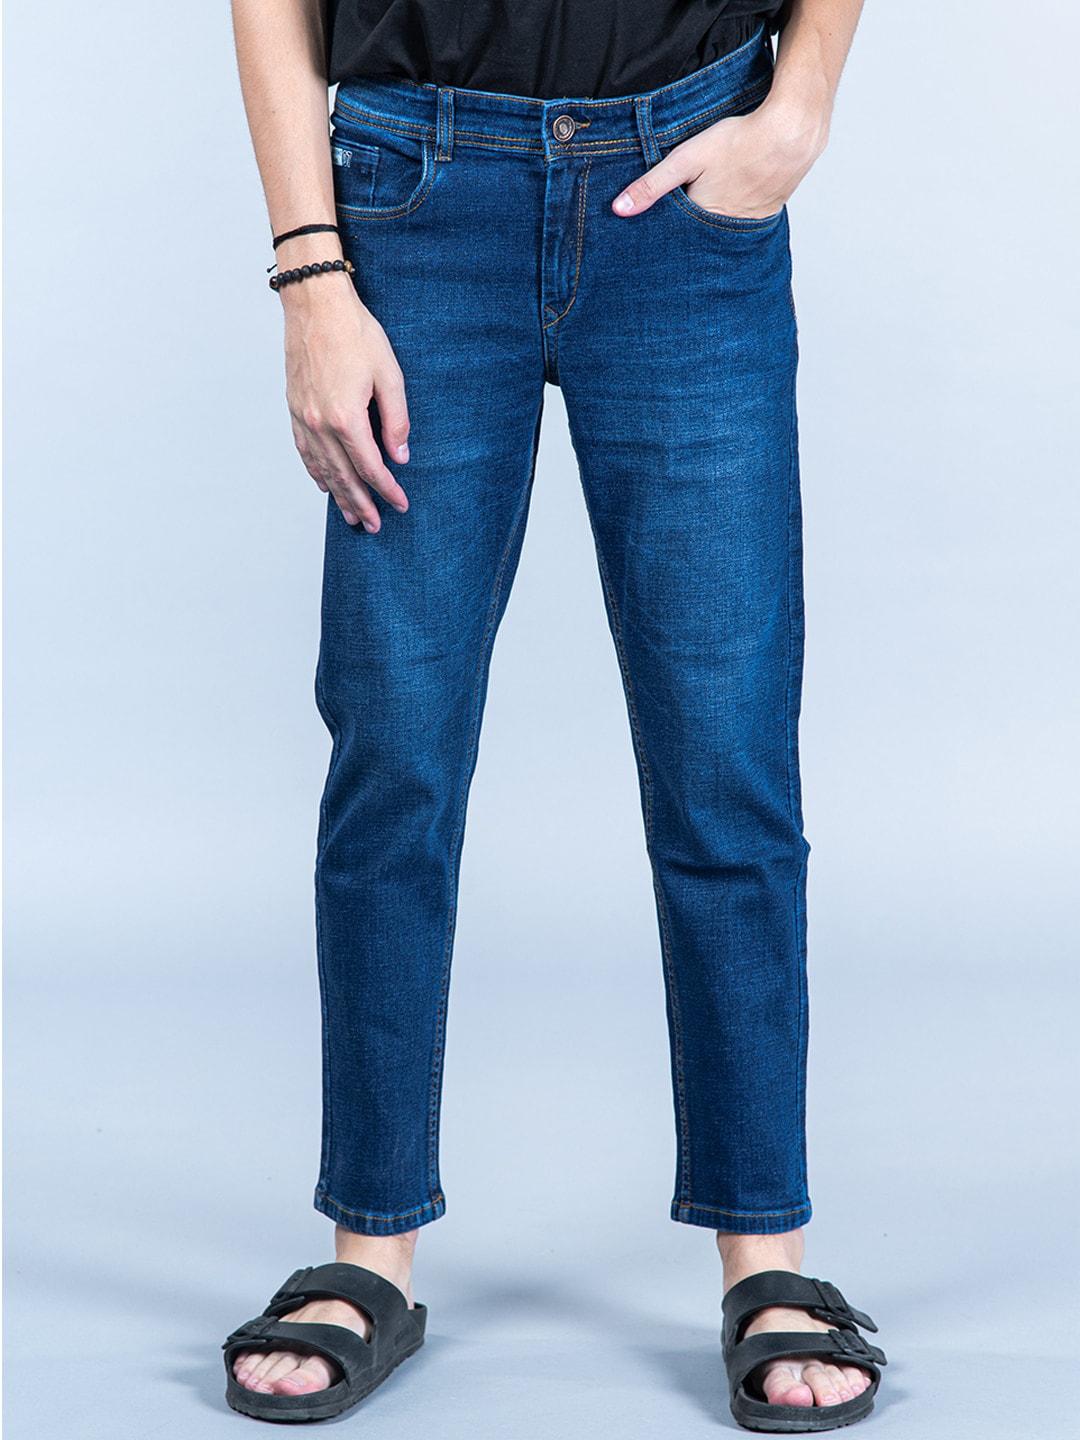 tistabene-men-comfort-clean-look-mid-rise-cotton-jeans